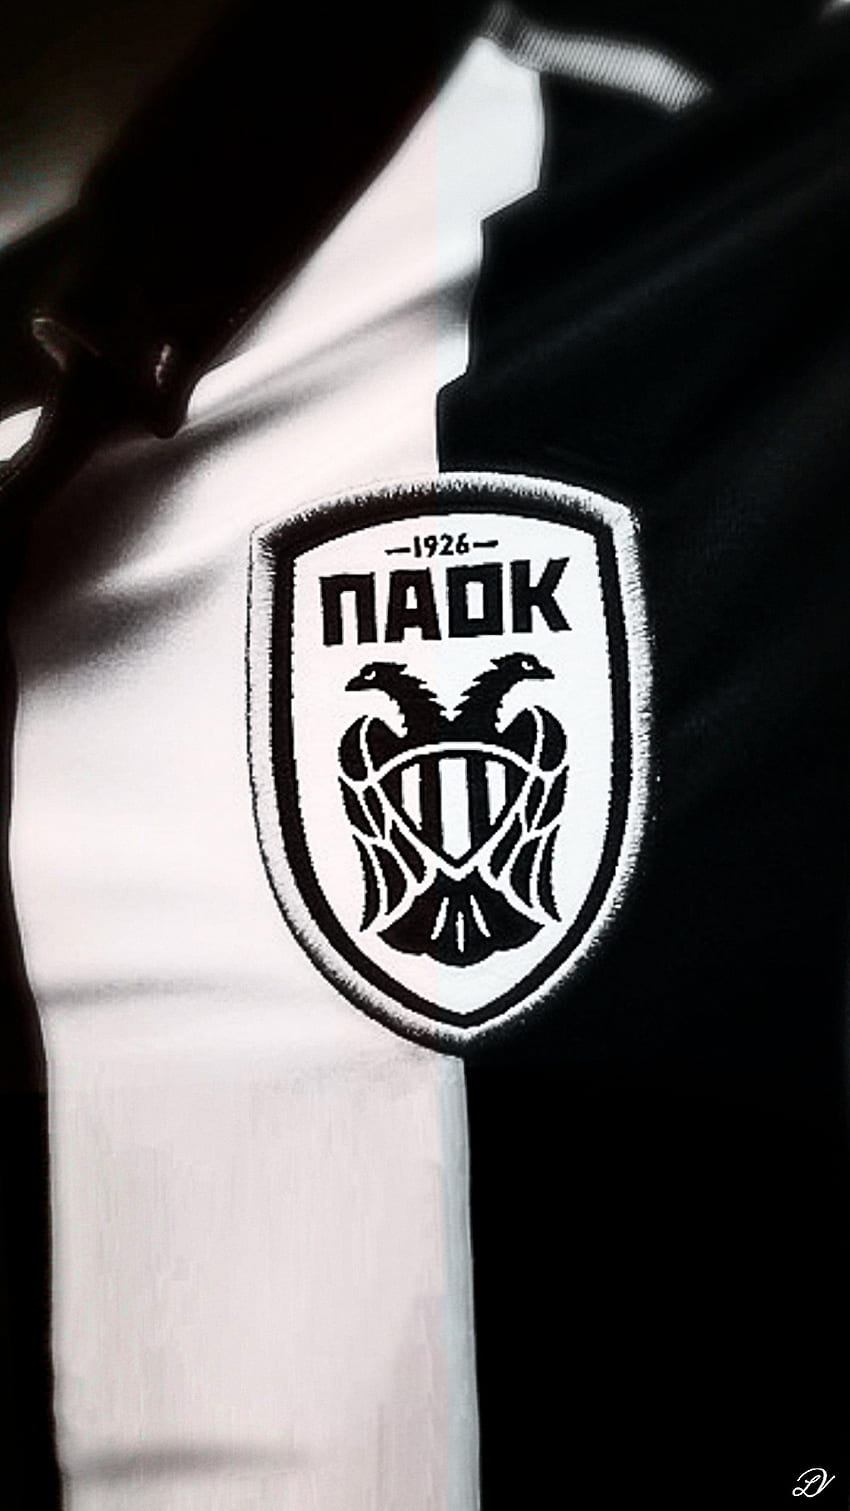 PAOK Jersey, dada, paokfc, hitam dan putih, yunani, elang, logo, sepak bola, lambang wallpaper ponsel HD